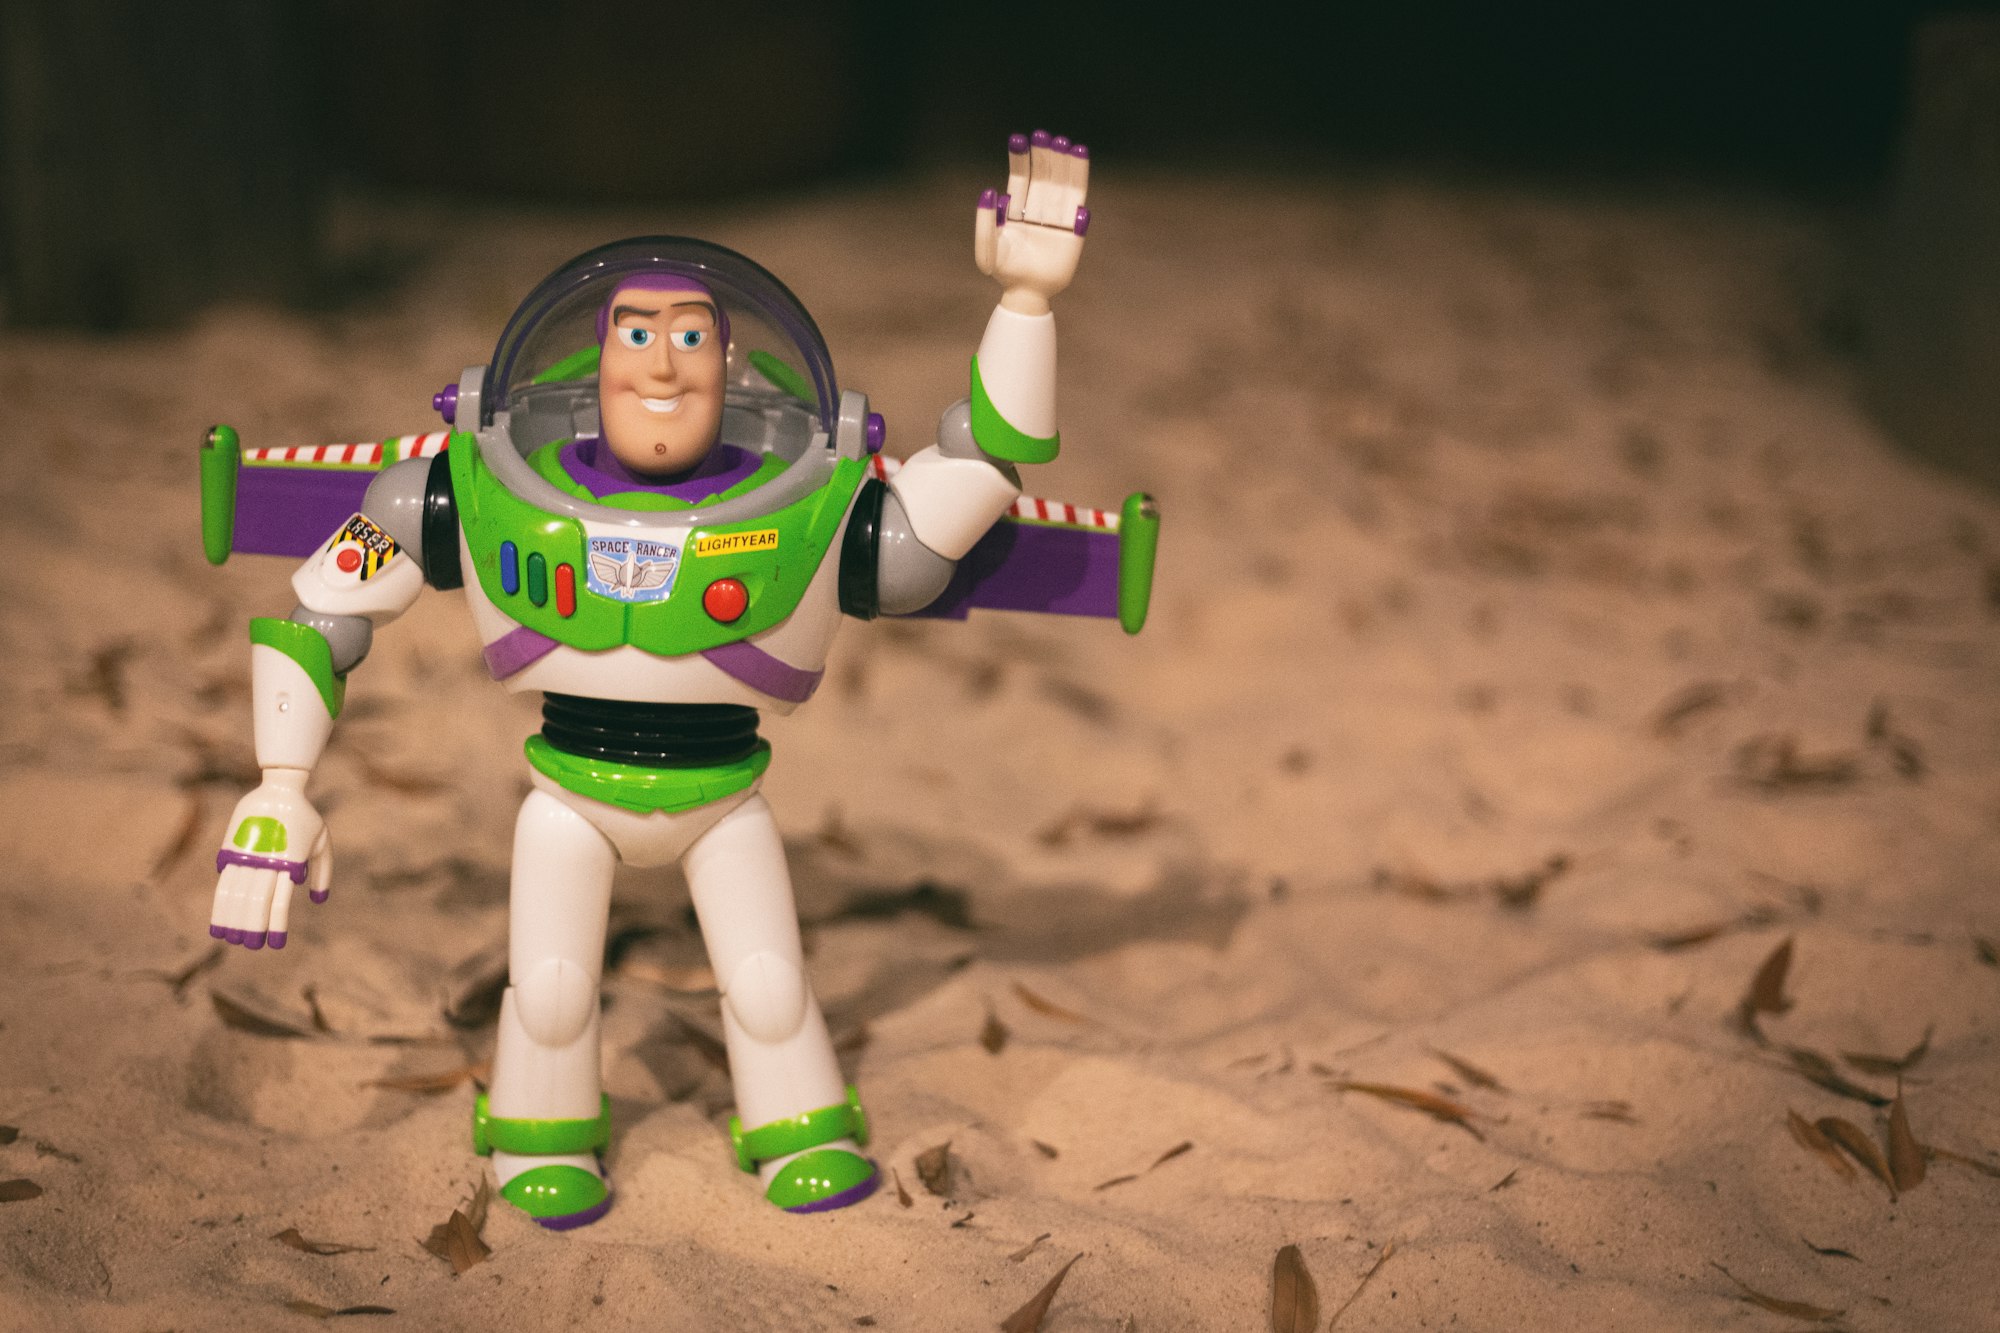 To infinity - of my sandbox. Buzz lightyear toy of the neighbor boy.